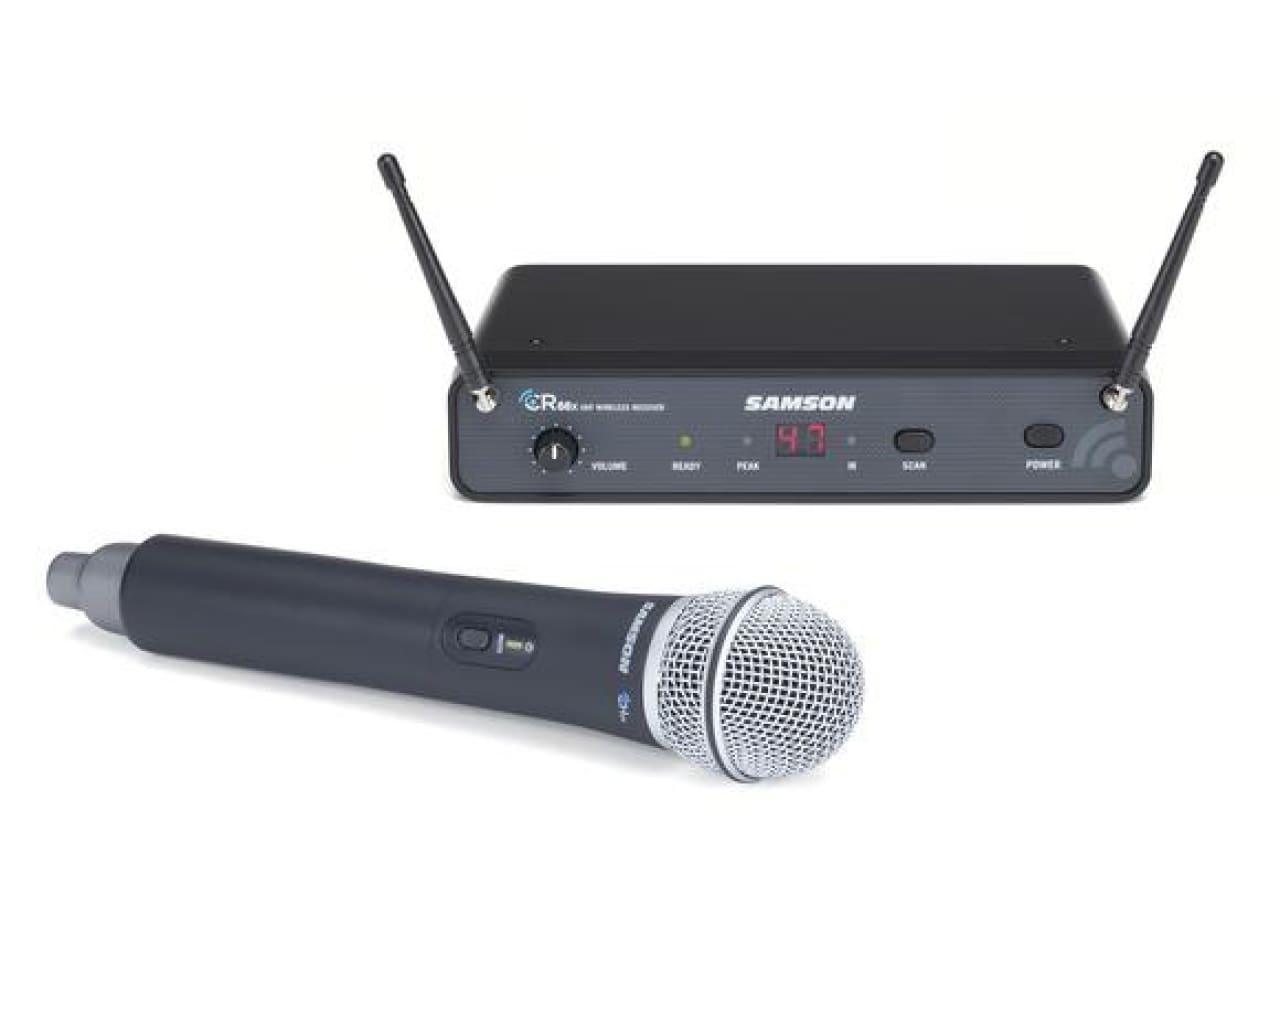 Samson Concert 88 Handheld wireless microphone system - Victor Litz